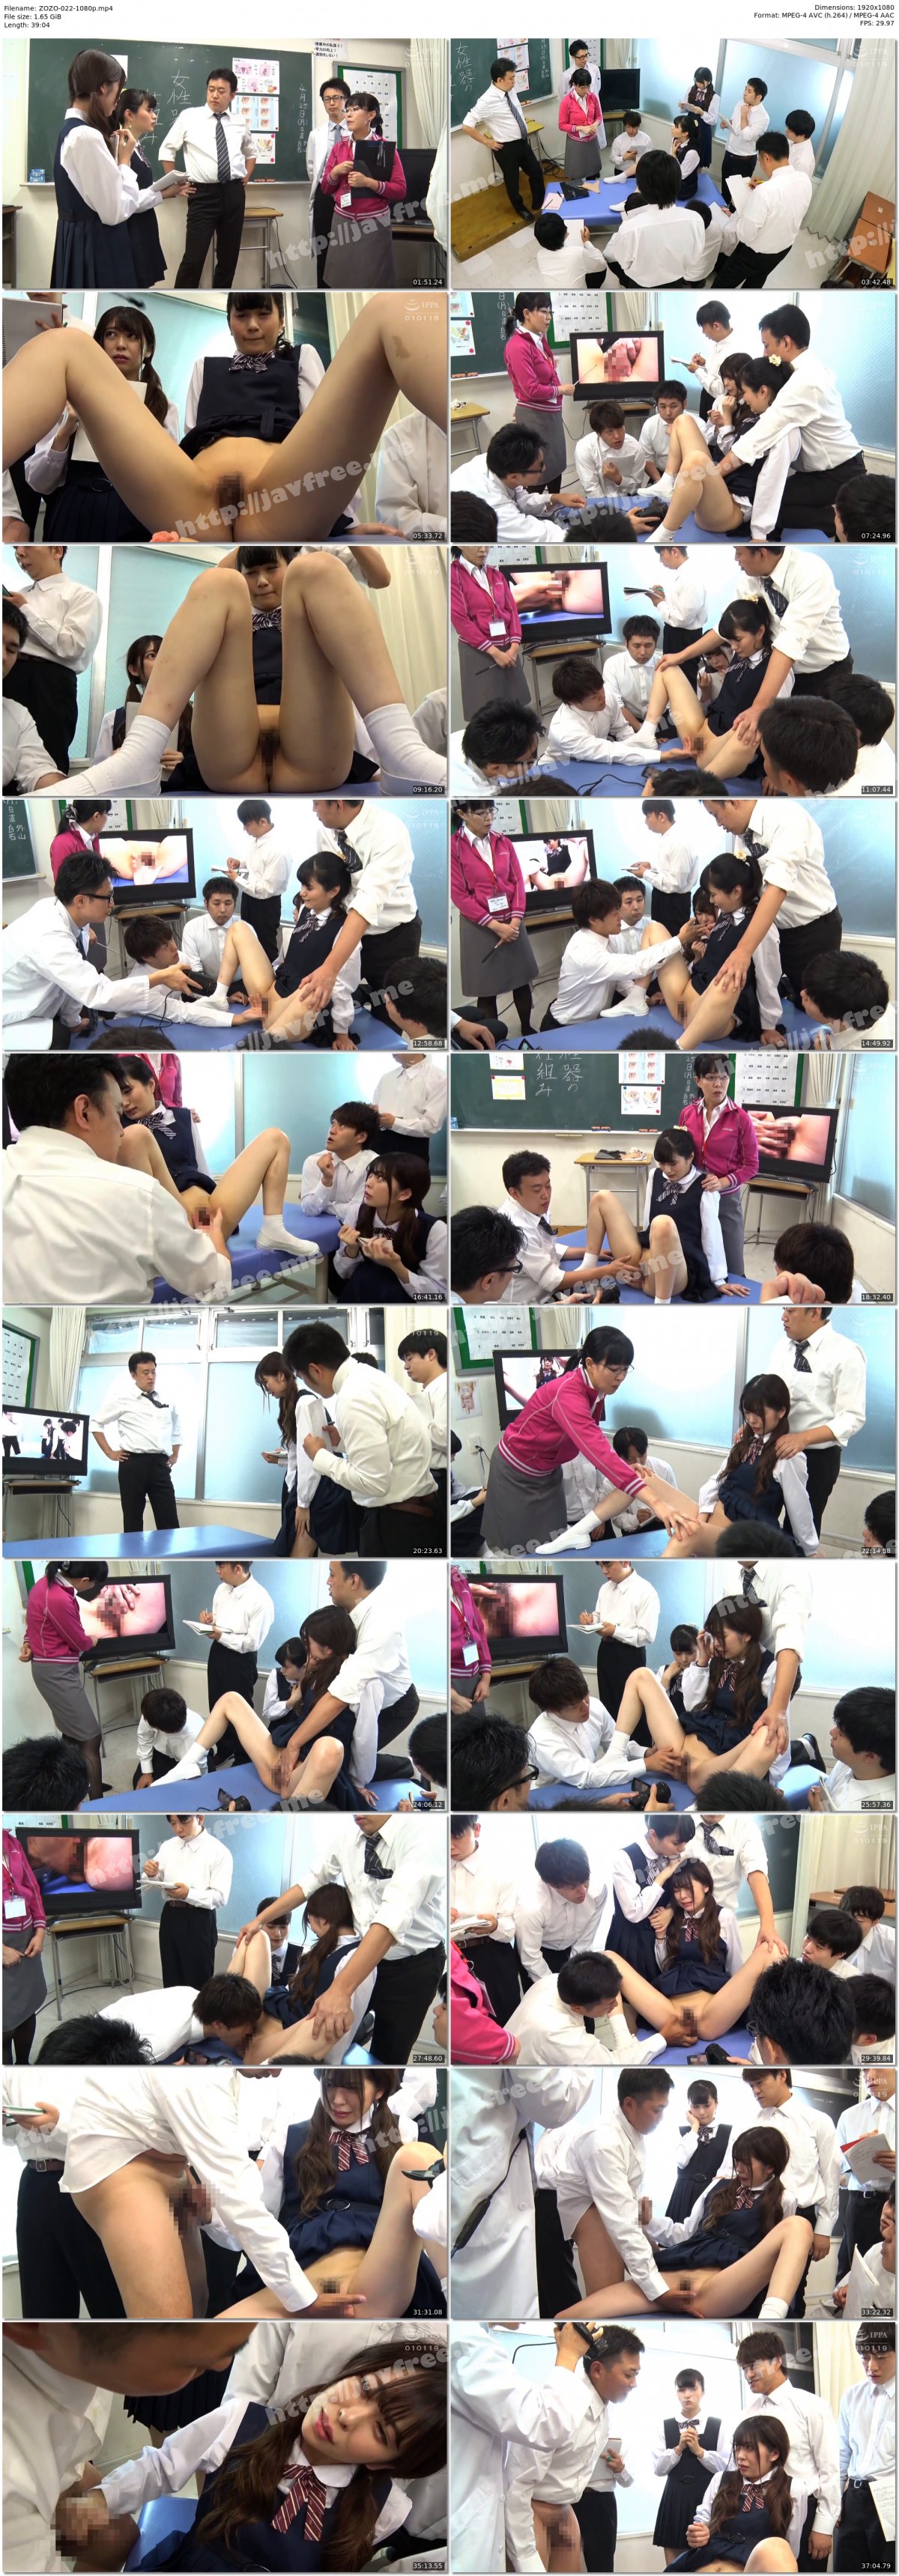 [HD][ZOZO-022] 共学校の保健体育2020年・3時限目 女性器の仕組みについて - image ZOZO-022-1080p on https://javfree.me